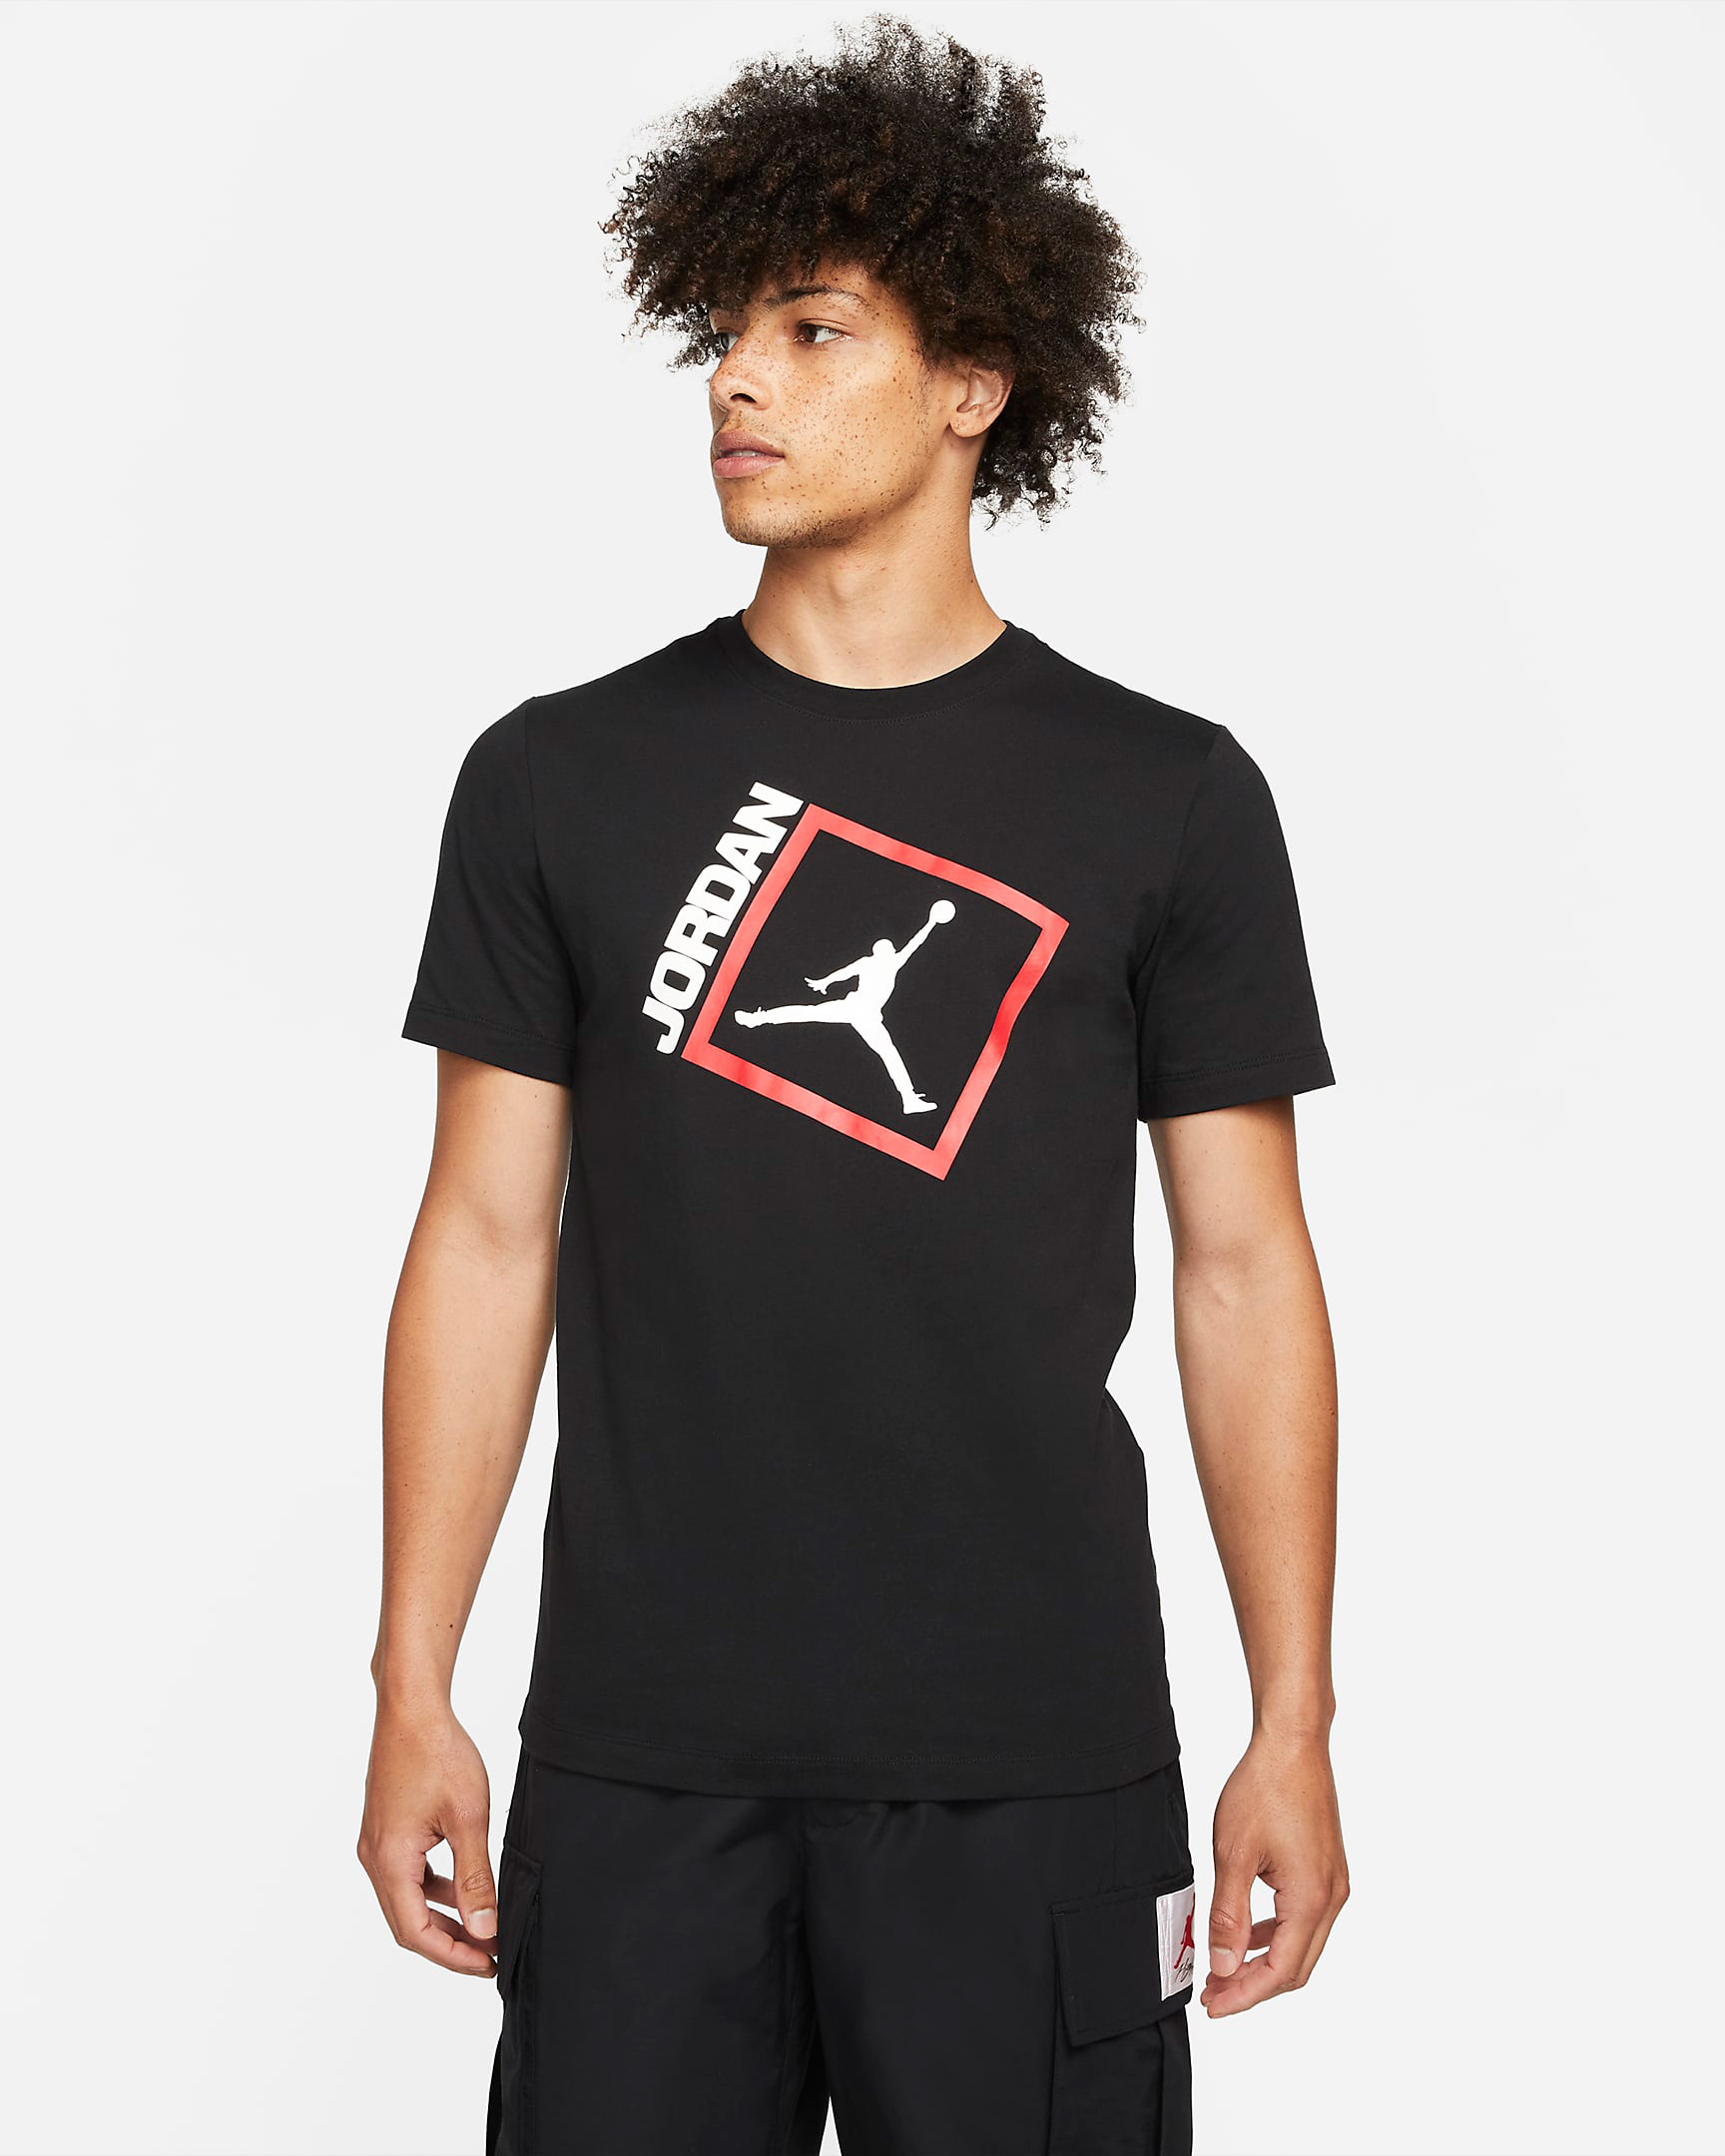 Air Jordan 1 Mid Siempre Familia Shirts Hats Clothing Outfits